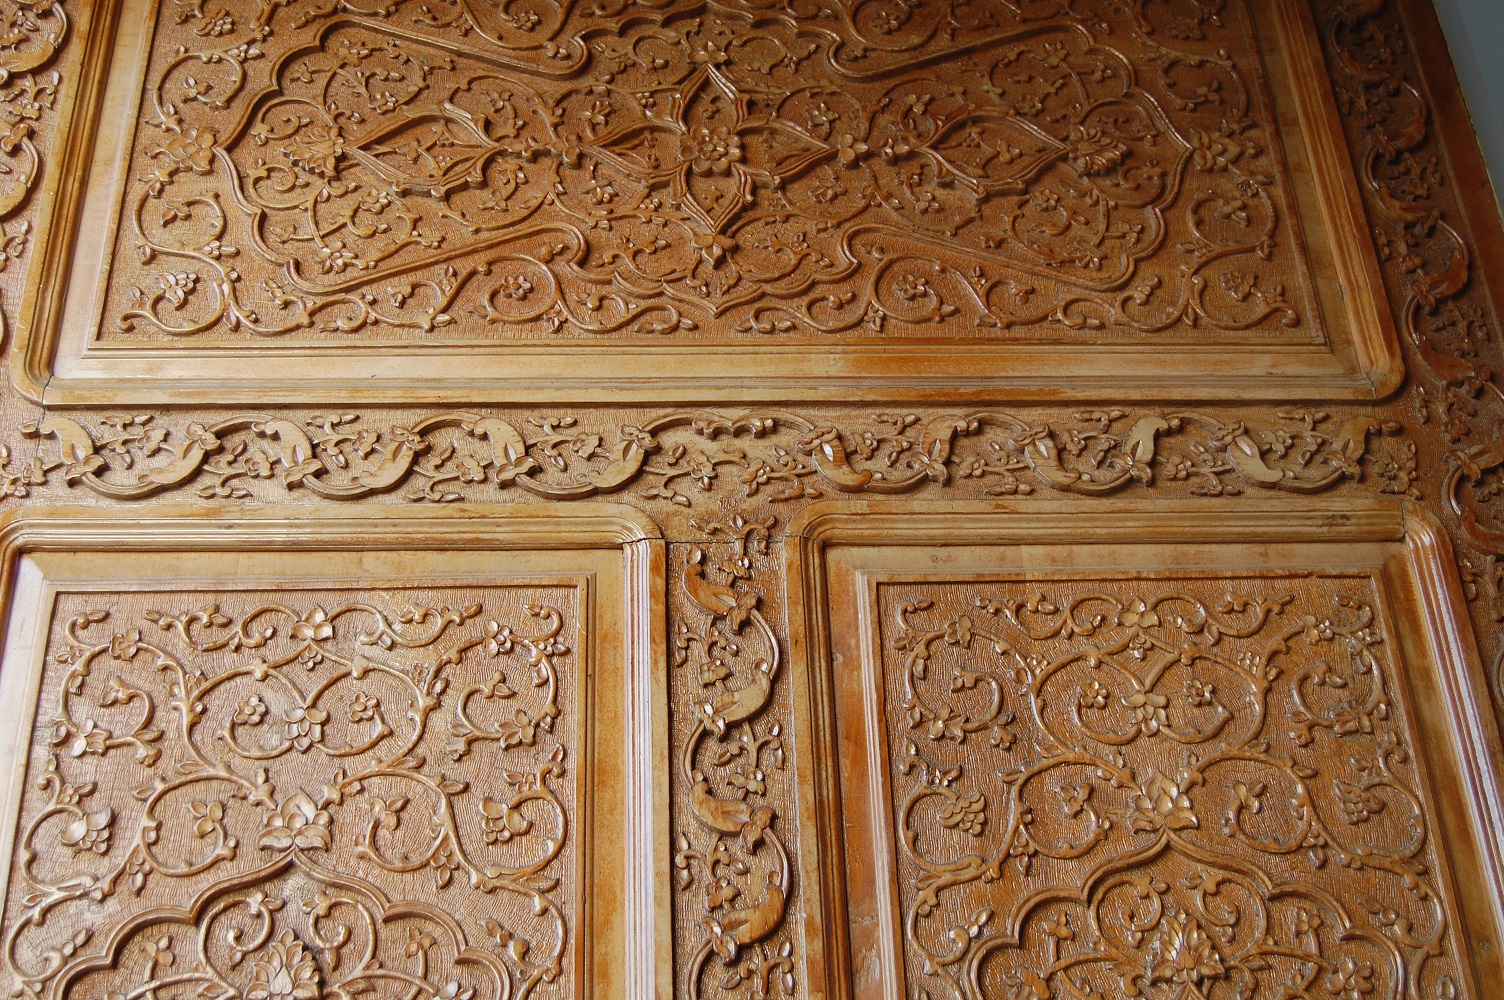 Doors decorations (wood carvings)